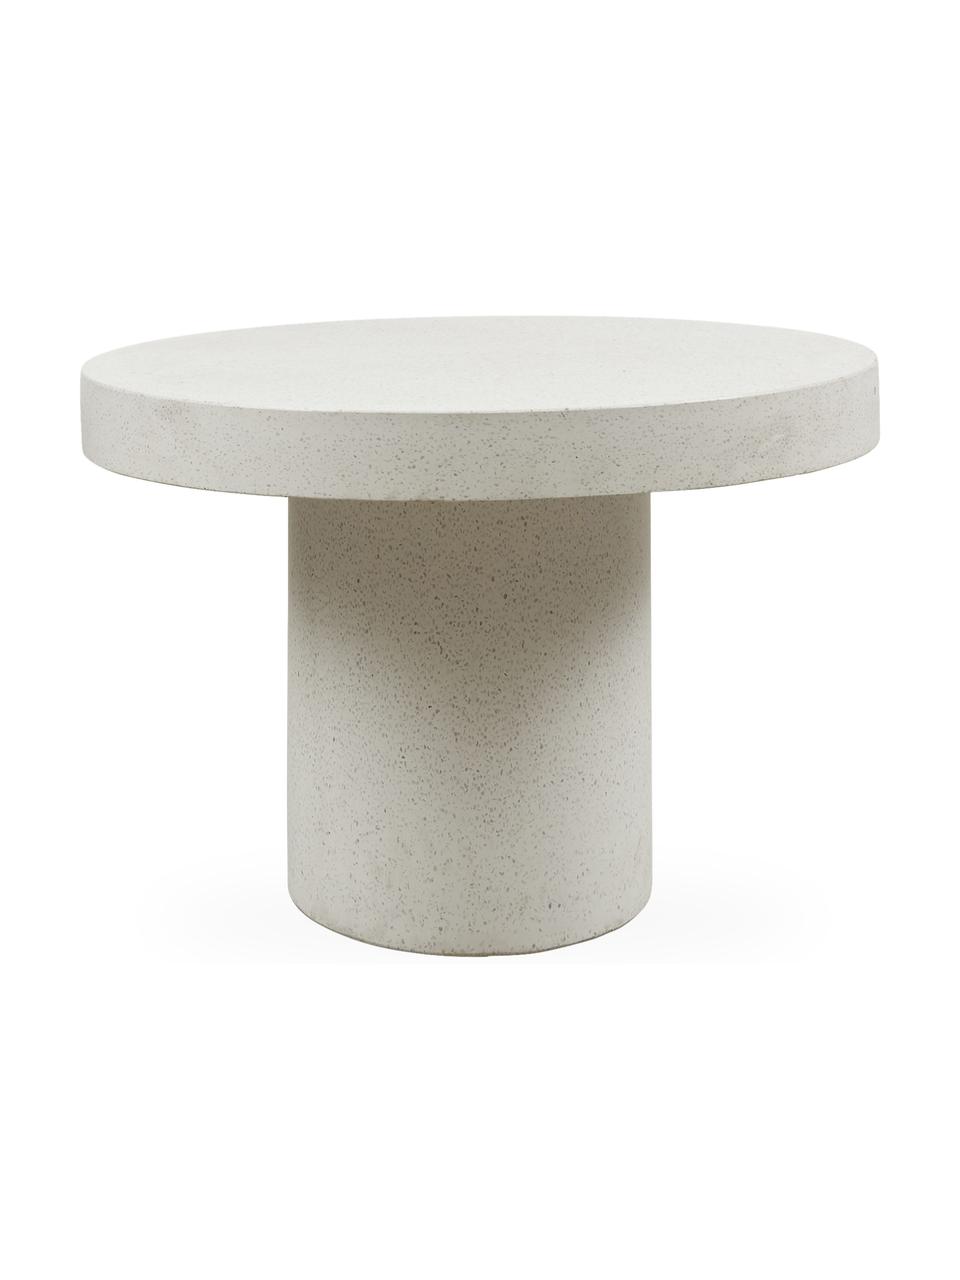 Table de jardin ronde Barbera, Ø 110 cm, Ardoise, métal, enduit, Blanc, Ø 110 x haut. 75 cm